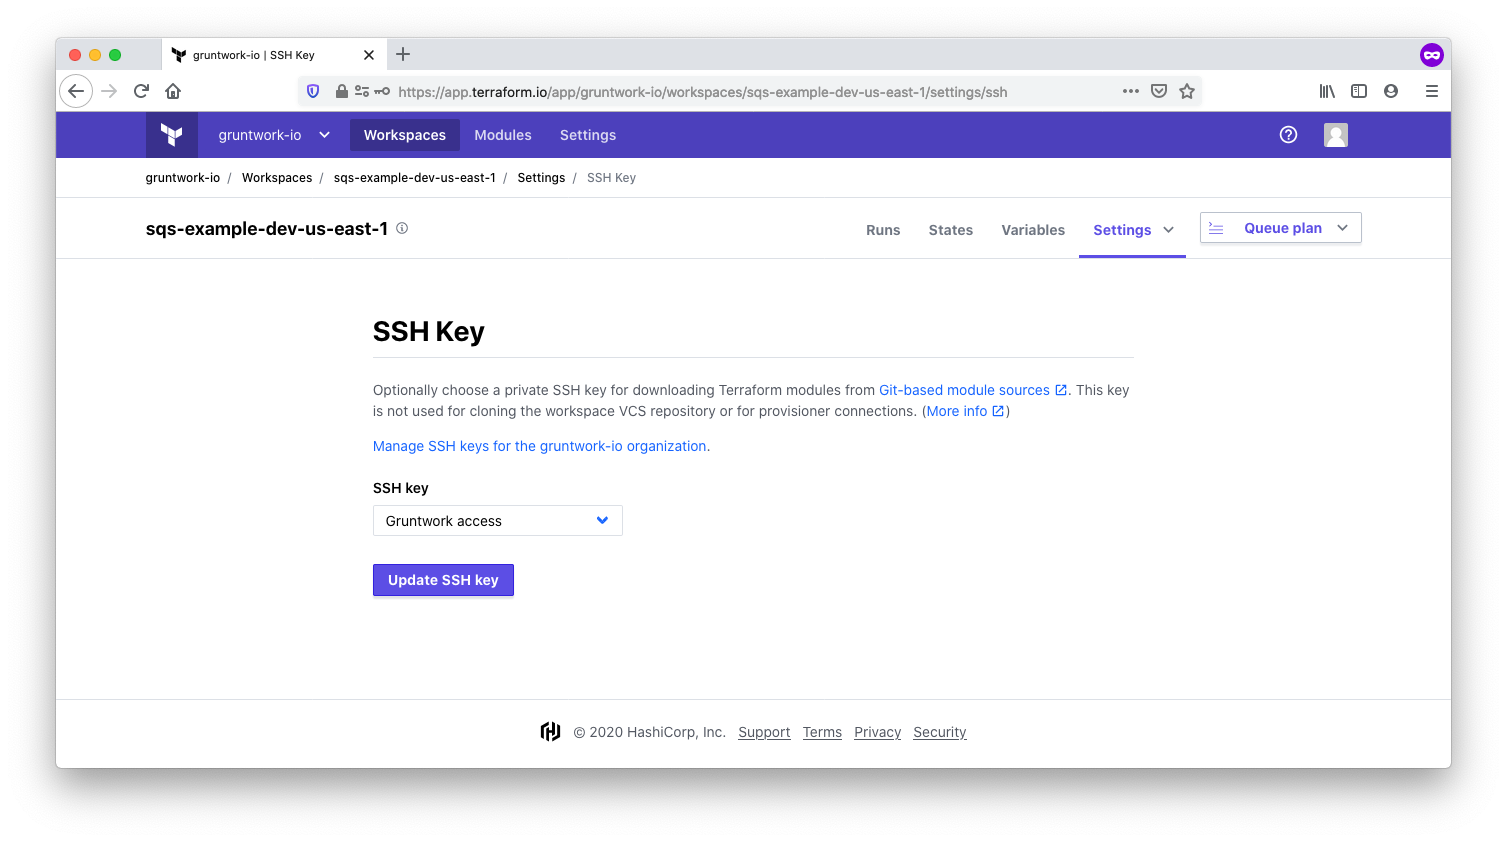 Choose the private SSH key